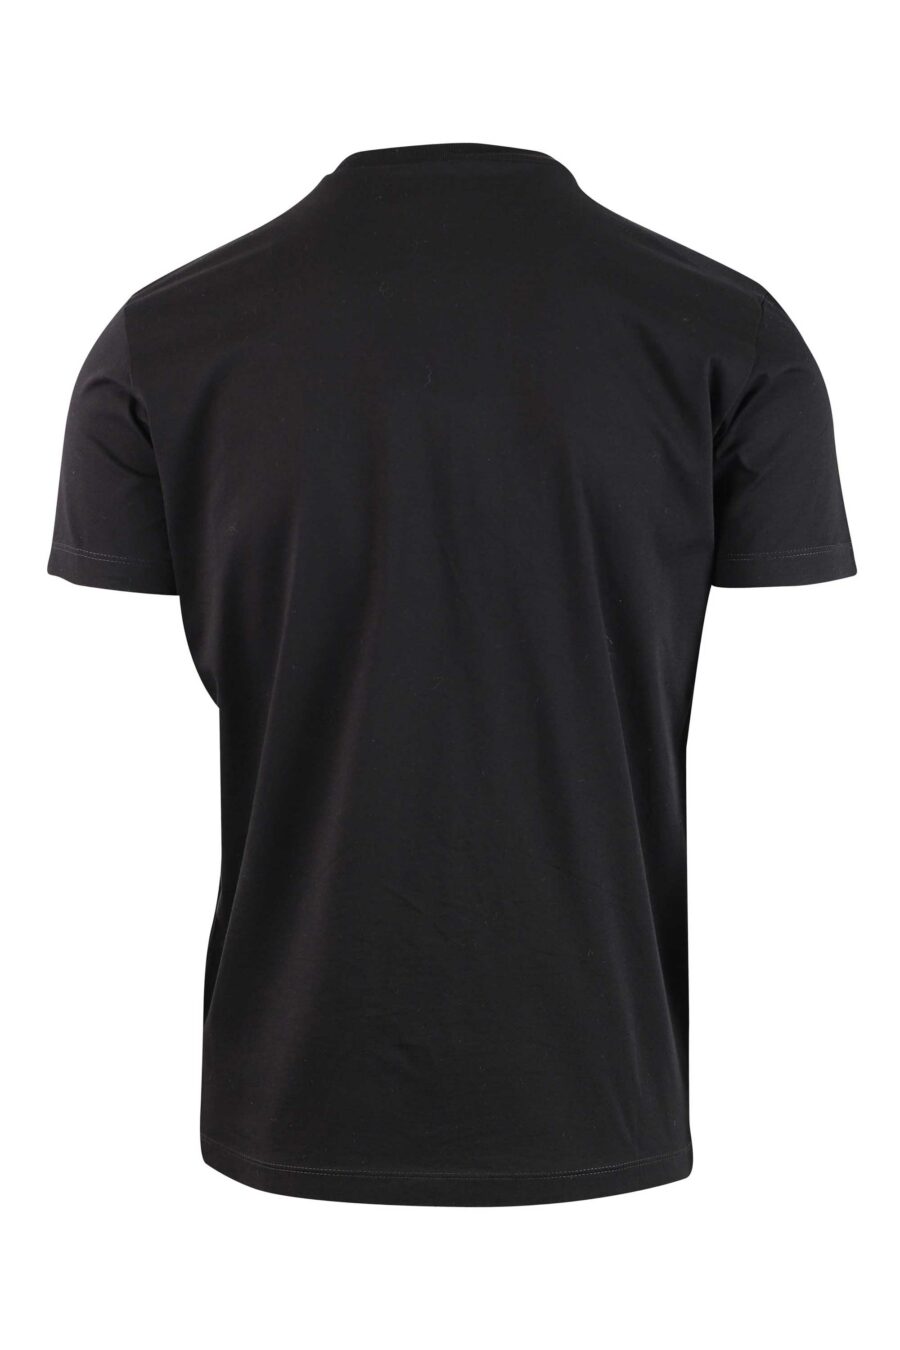 Schwarzes T-Shirt mit mehrfarbigem Maxilogo - IMG 0036 1